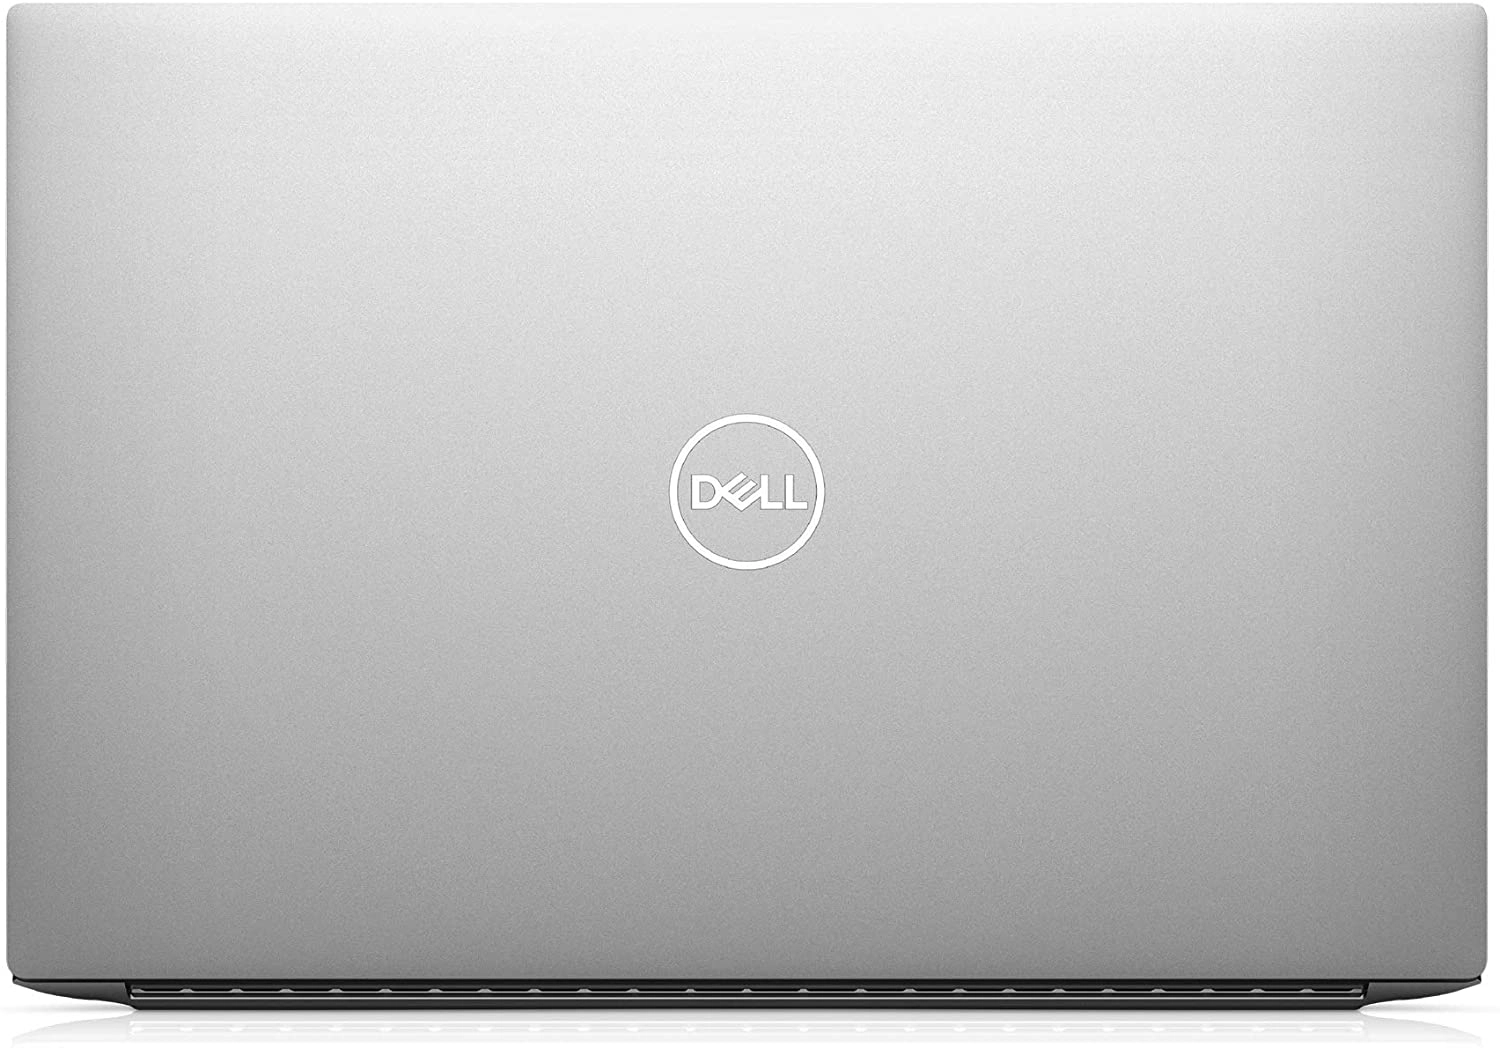 Dell XPS9500-7002SLV-PUS laptop image